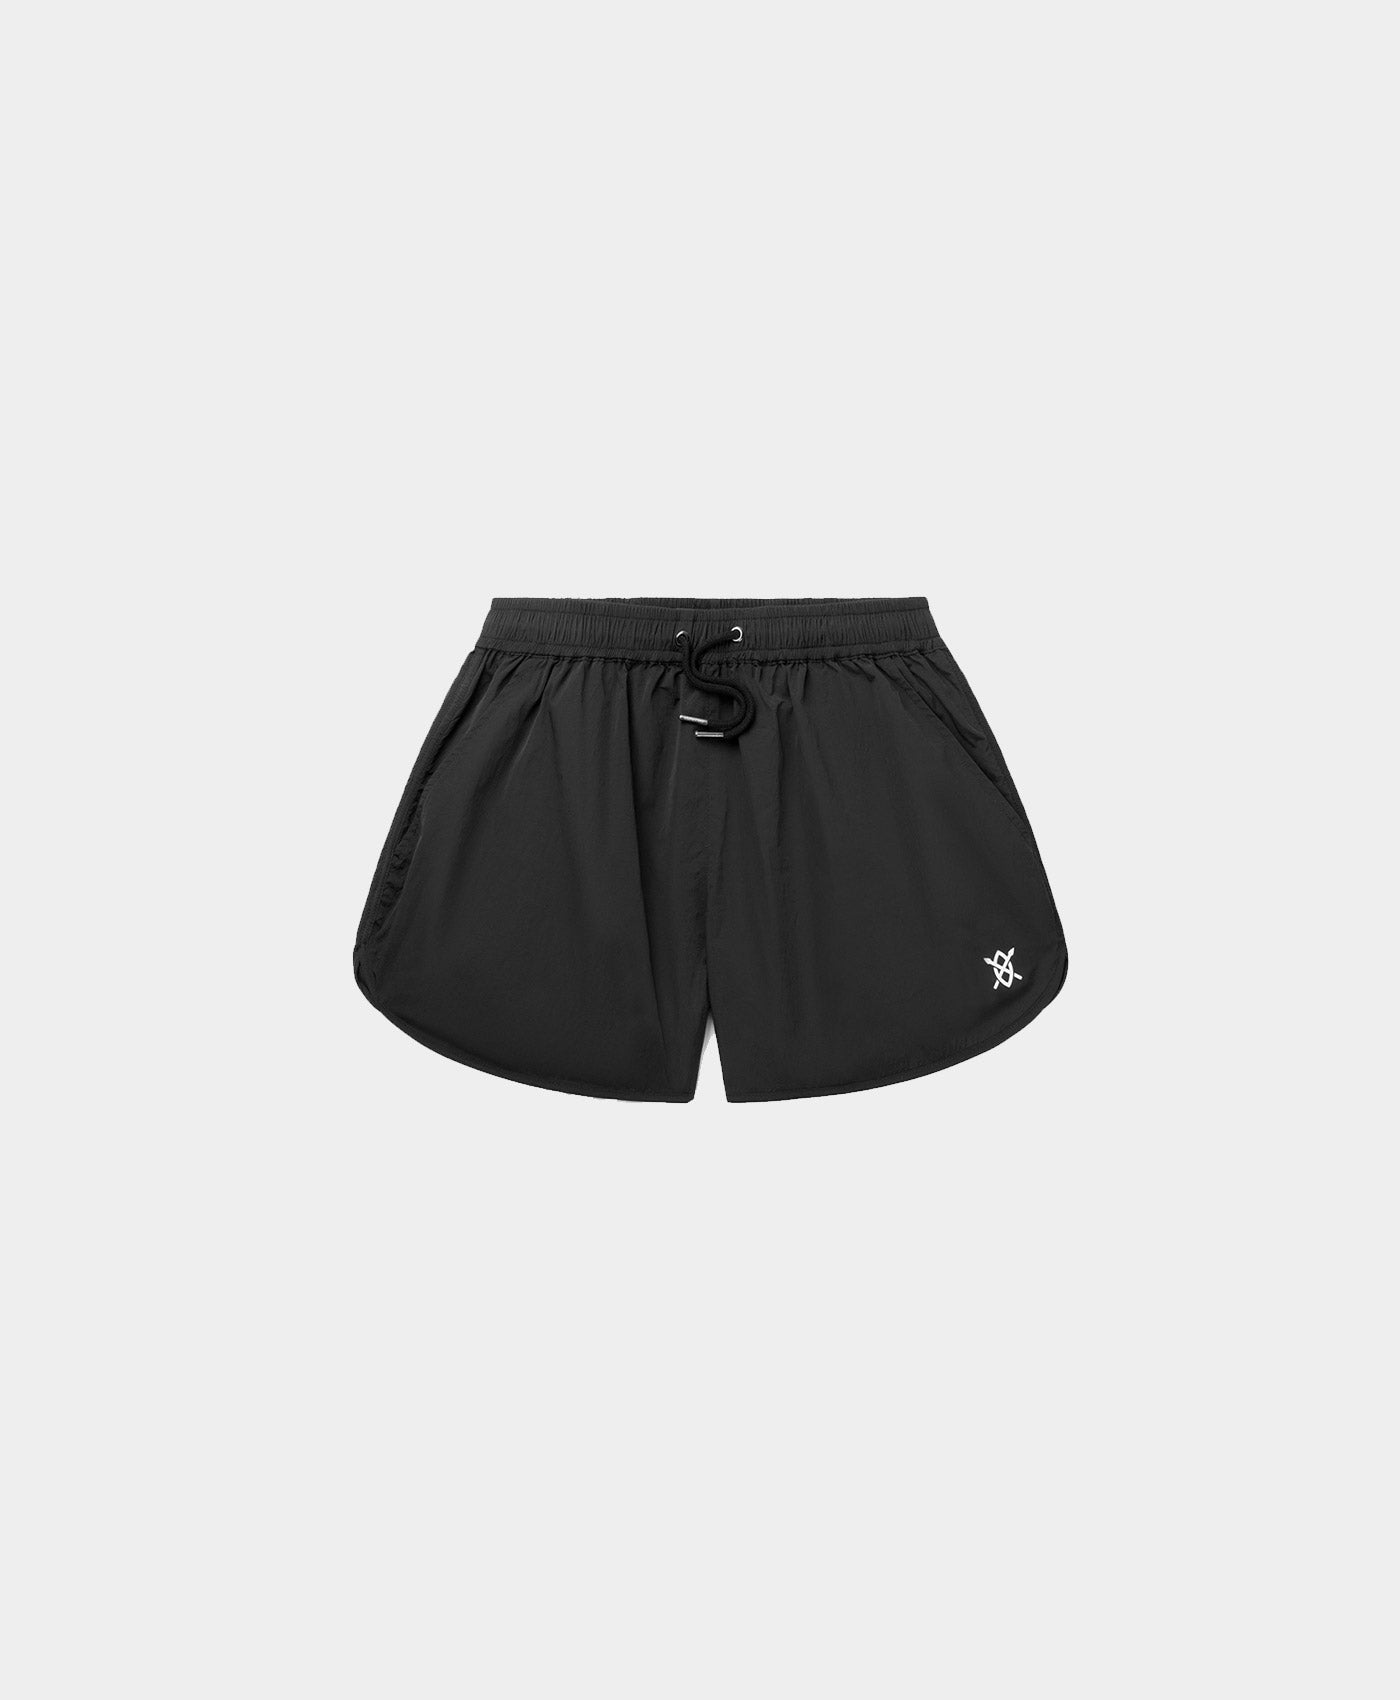 DP - Black Efeah Shorts - Packshot - Front